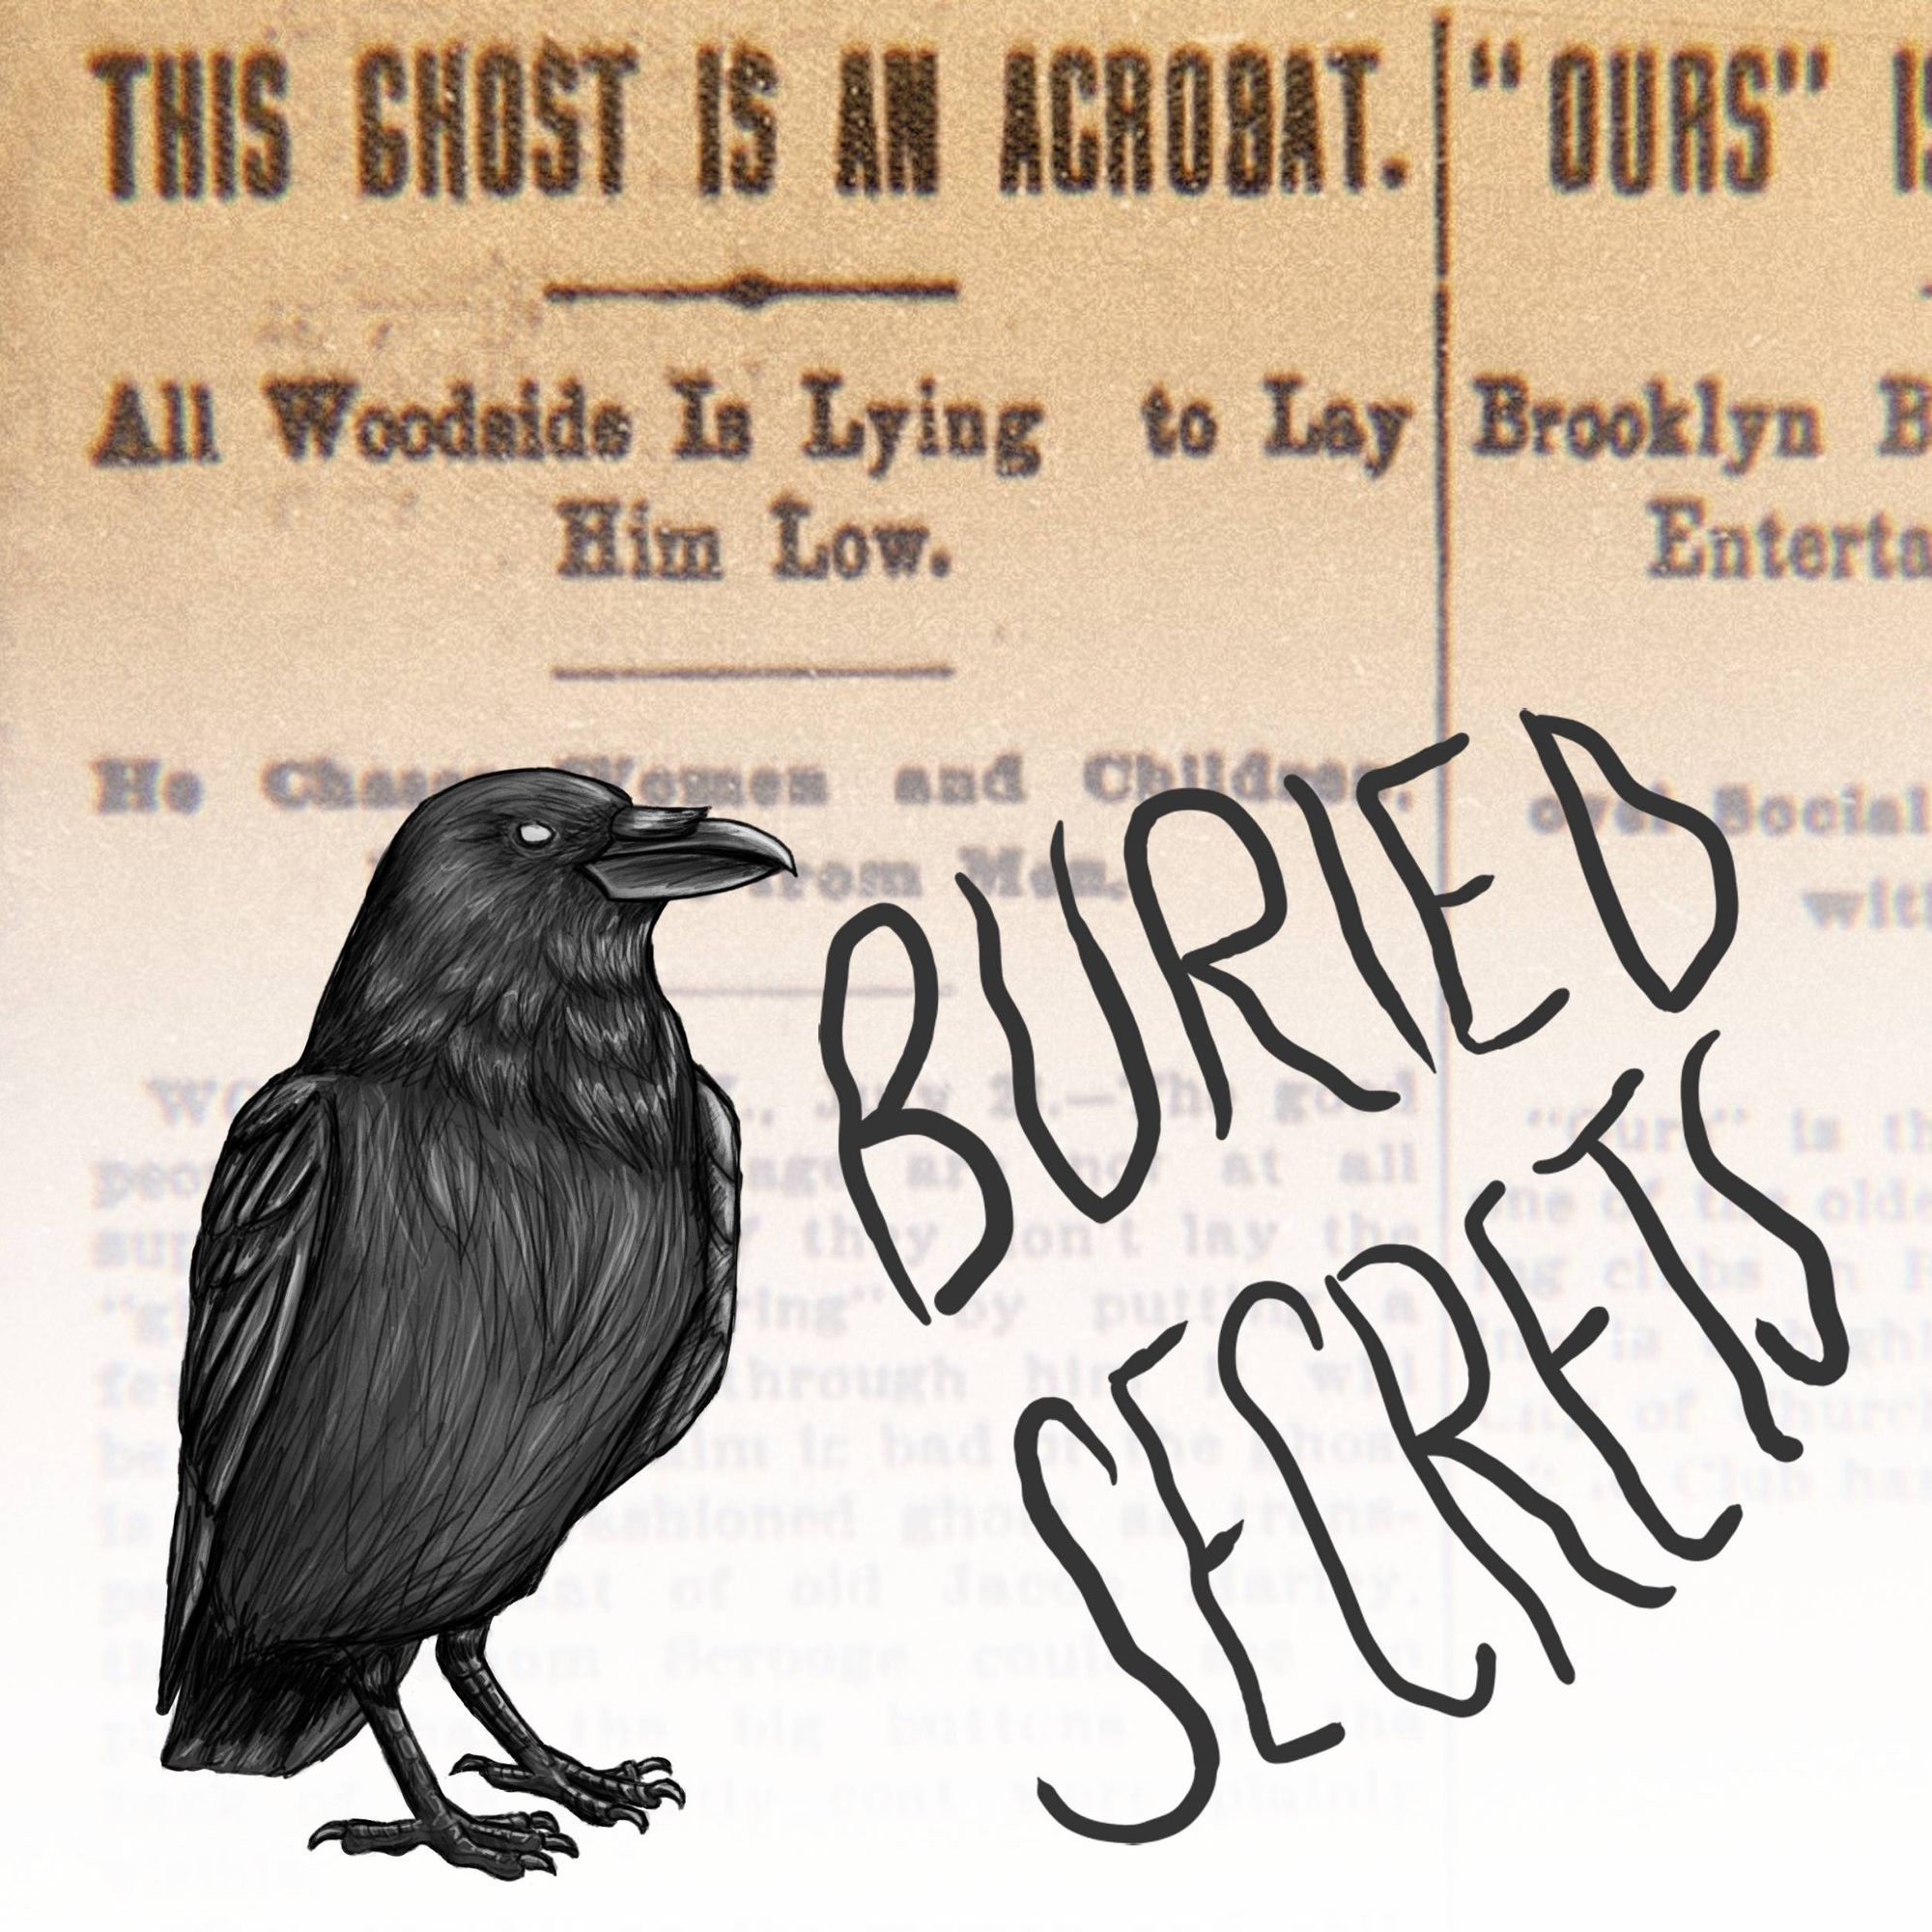 An Acrobatic Ghost in Woodside: Part 2 (Haunted Queens)